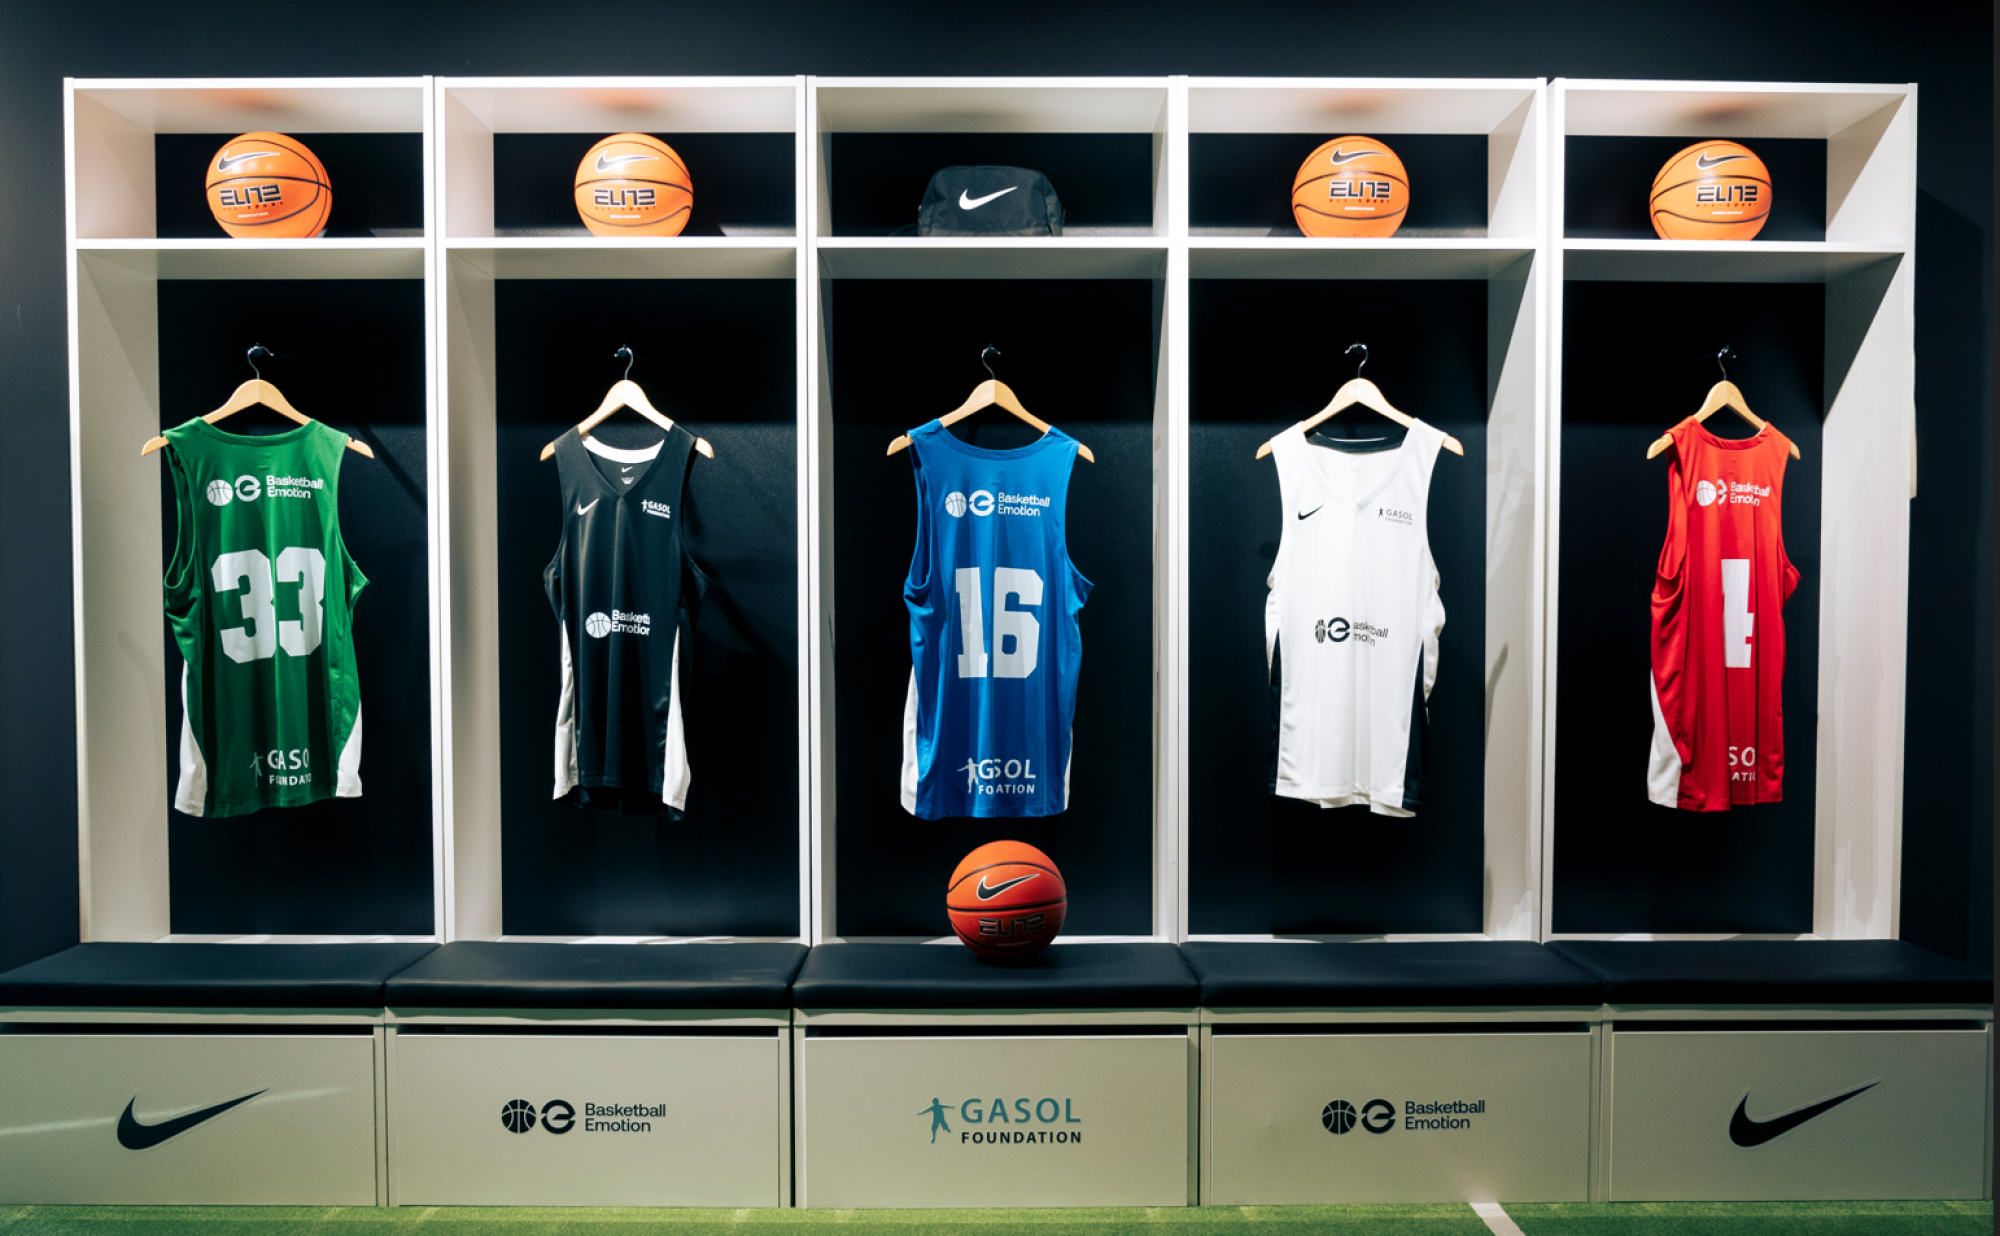 La Gasol Foundation promueve la salud en dos clubes de baloncesto del Baix Llobregat